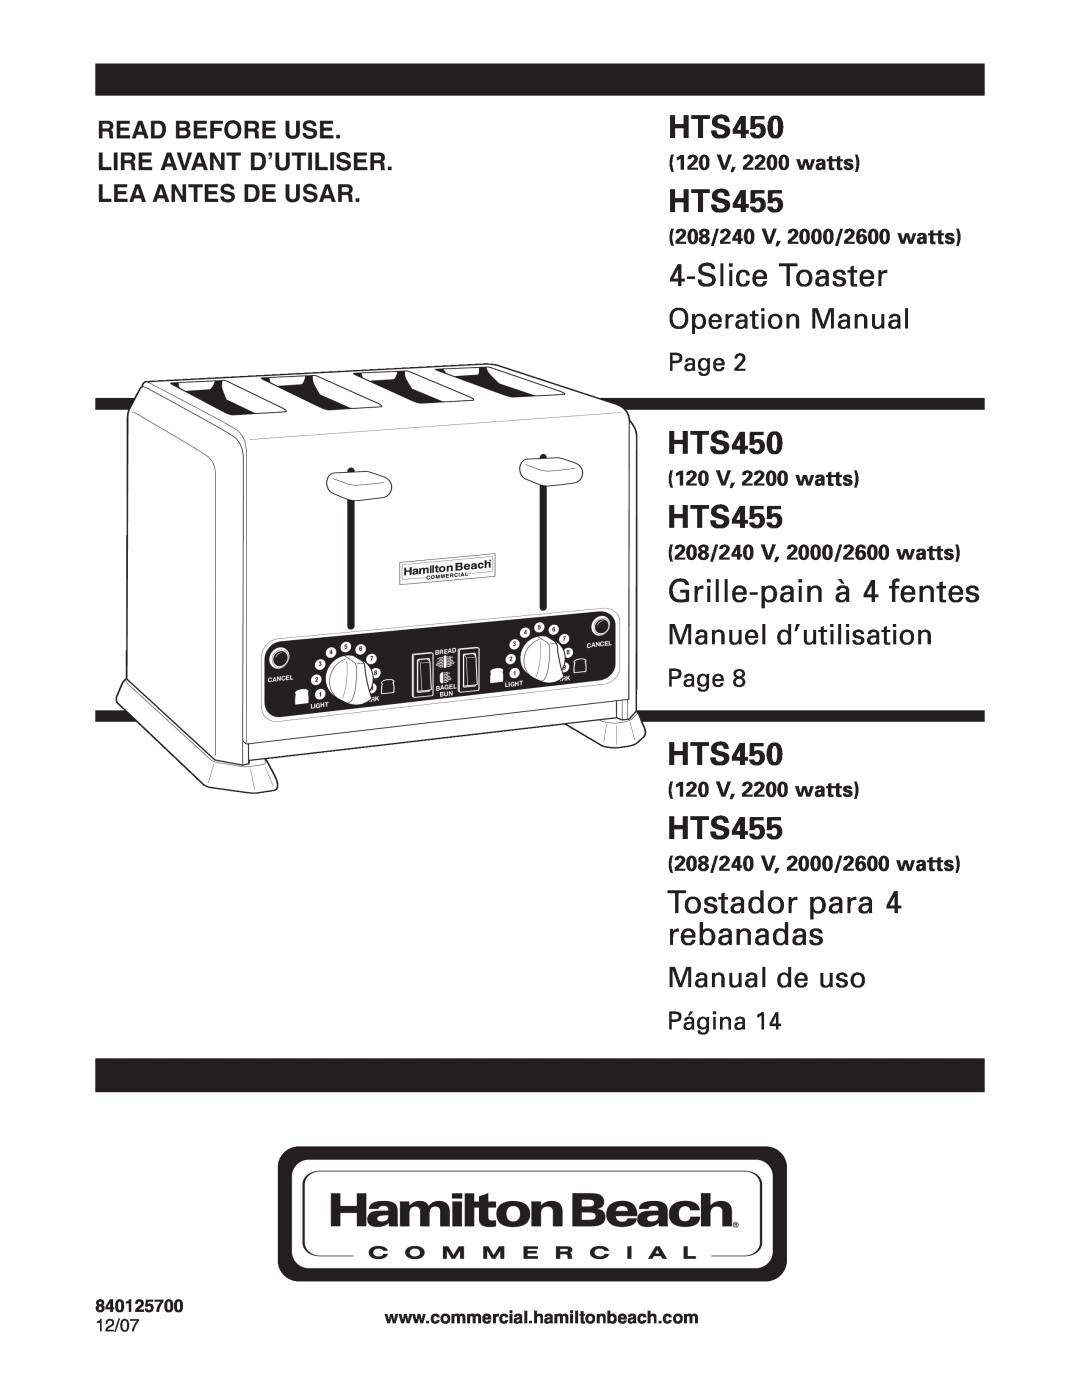 Hamilton Beach HTS455 operation manual HTS450, Slice Toaster, Grille-pain à 4 fentes, Tostador para 4 rebanadas, Page 